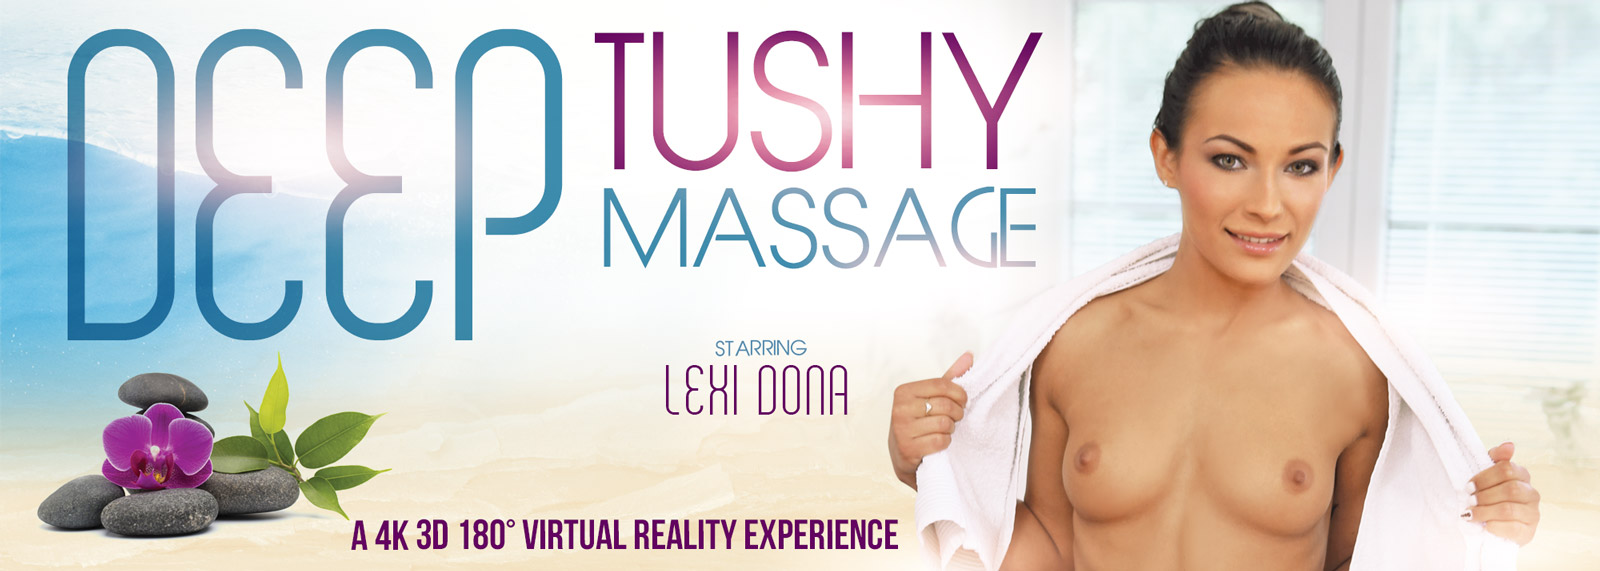 Deep Tushy Massage with Lexi Dona  Slideshow